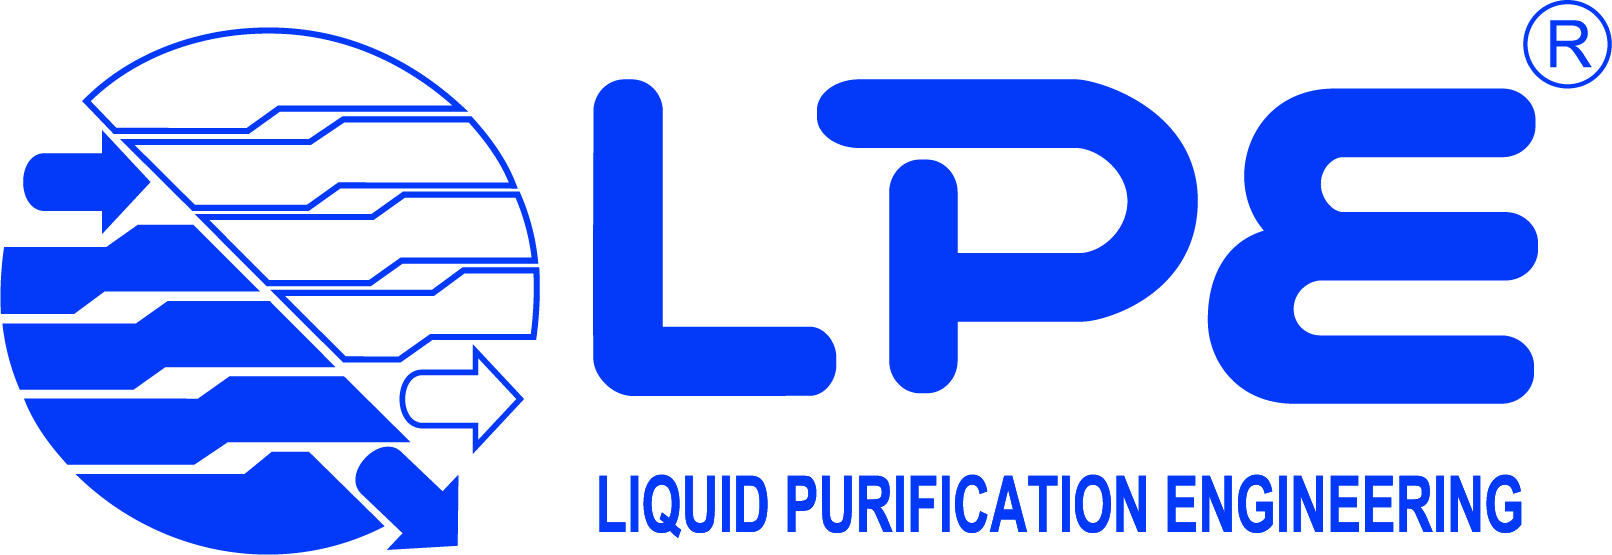 Liquid Purification Engineering International Co., Ltd.